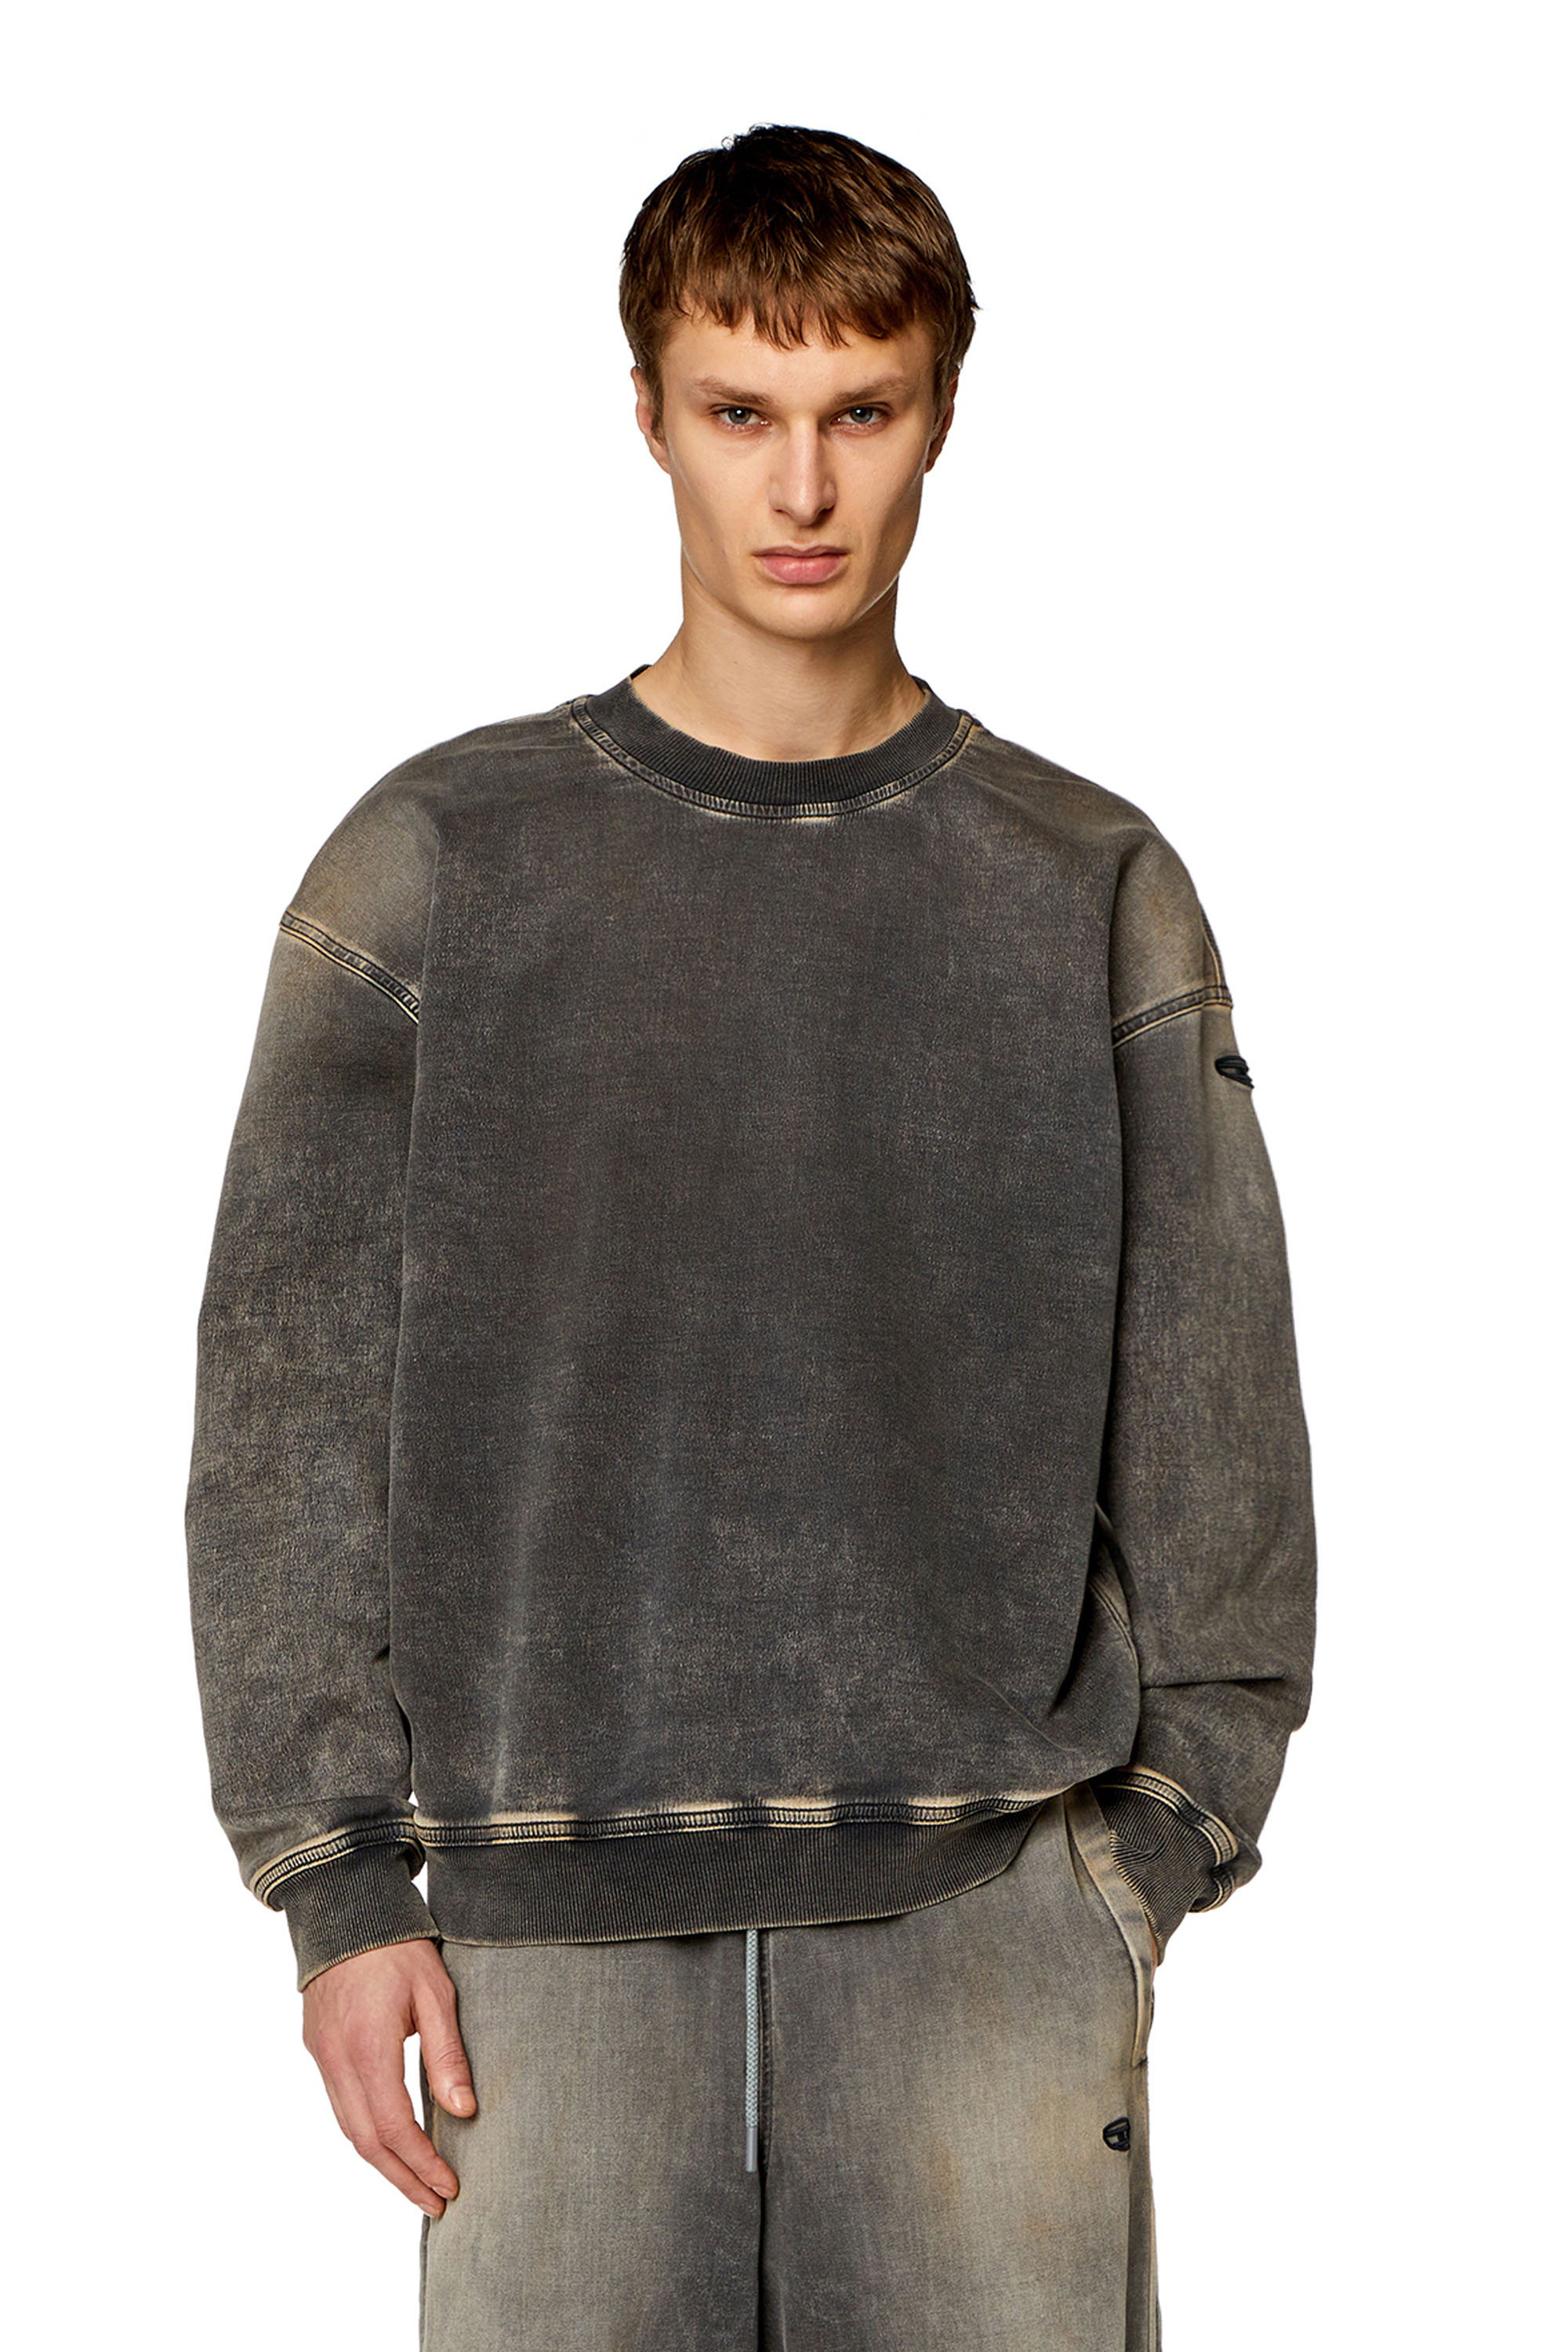 Diesel - Sweat-shirt en Track Denim - Pull Cotton - Homme - Noir